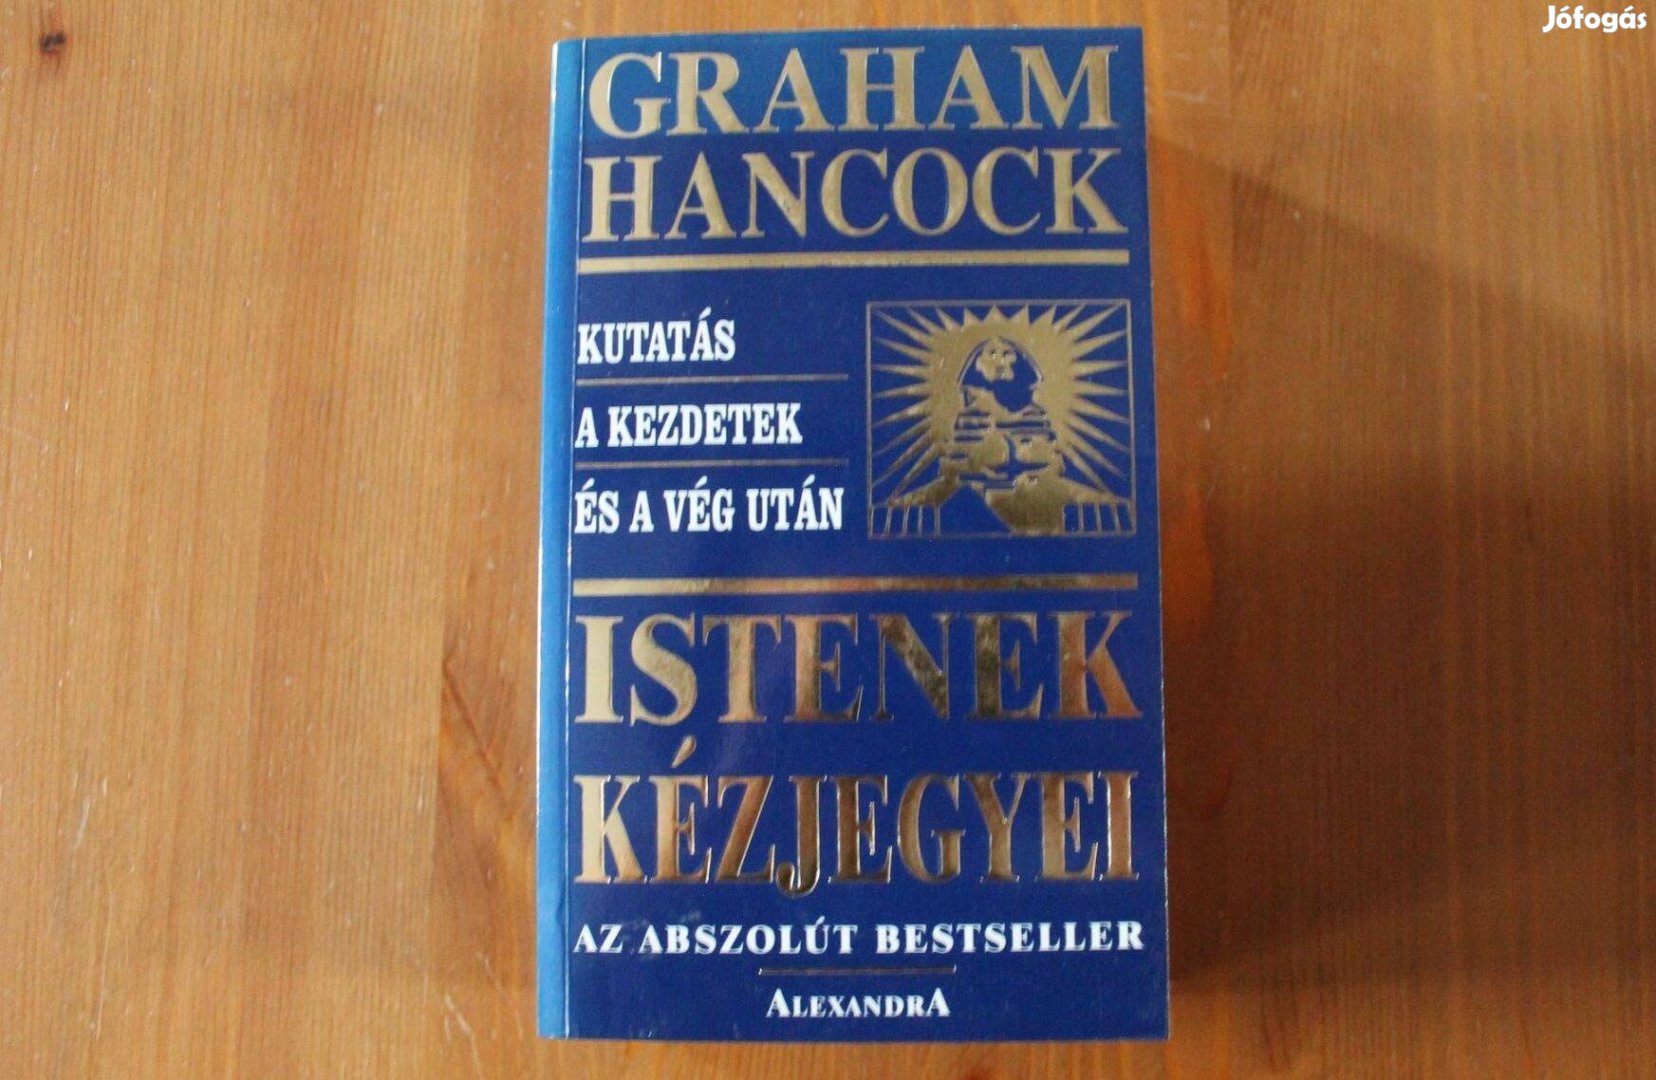 Gaham Hancock - Istenek kézjegyei